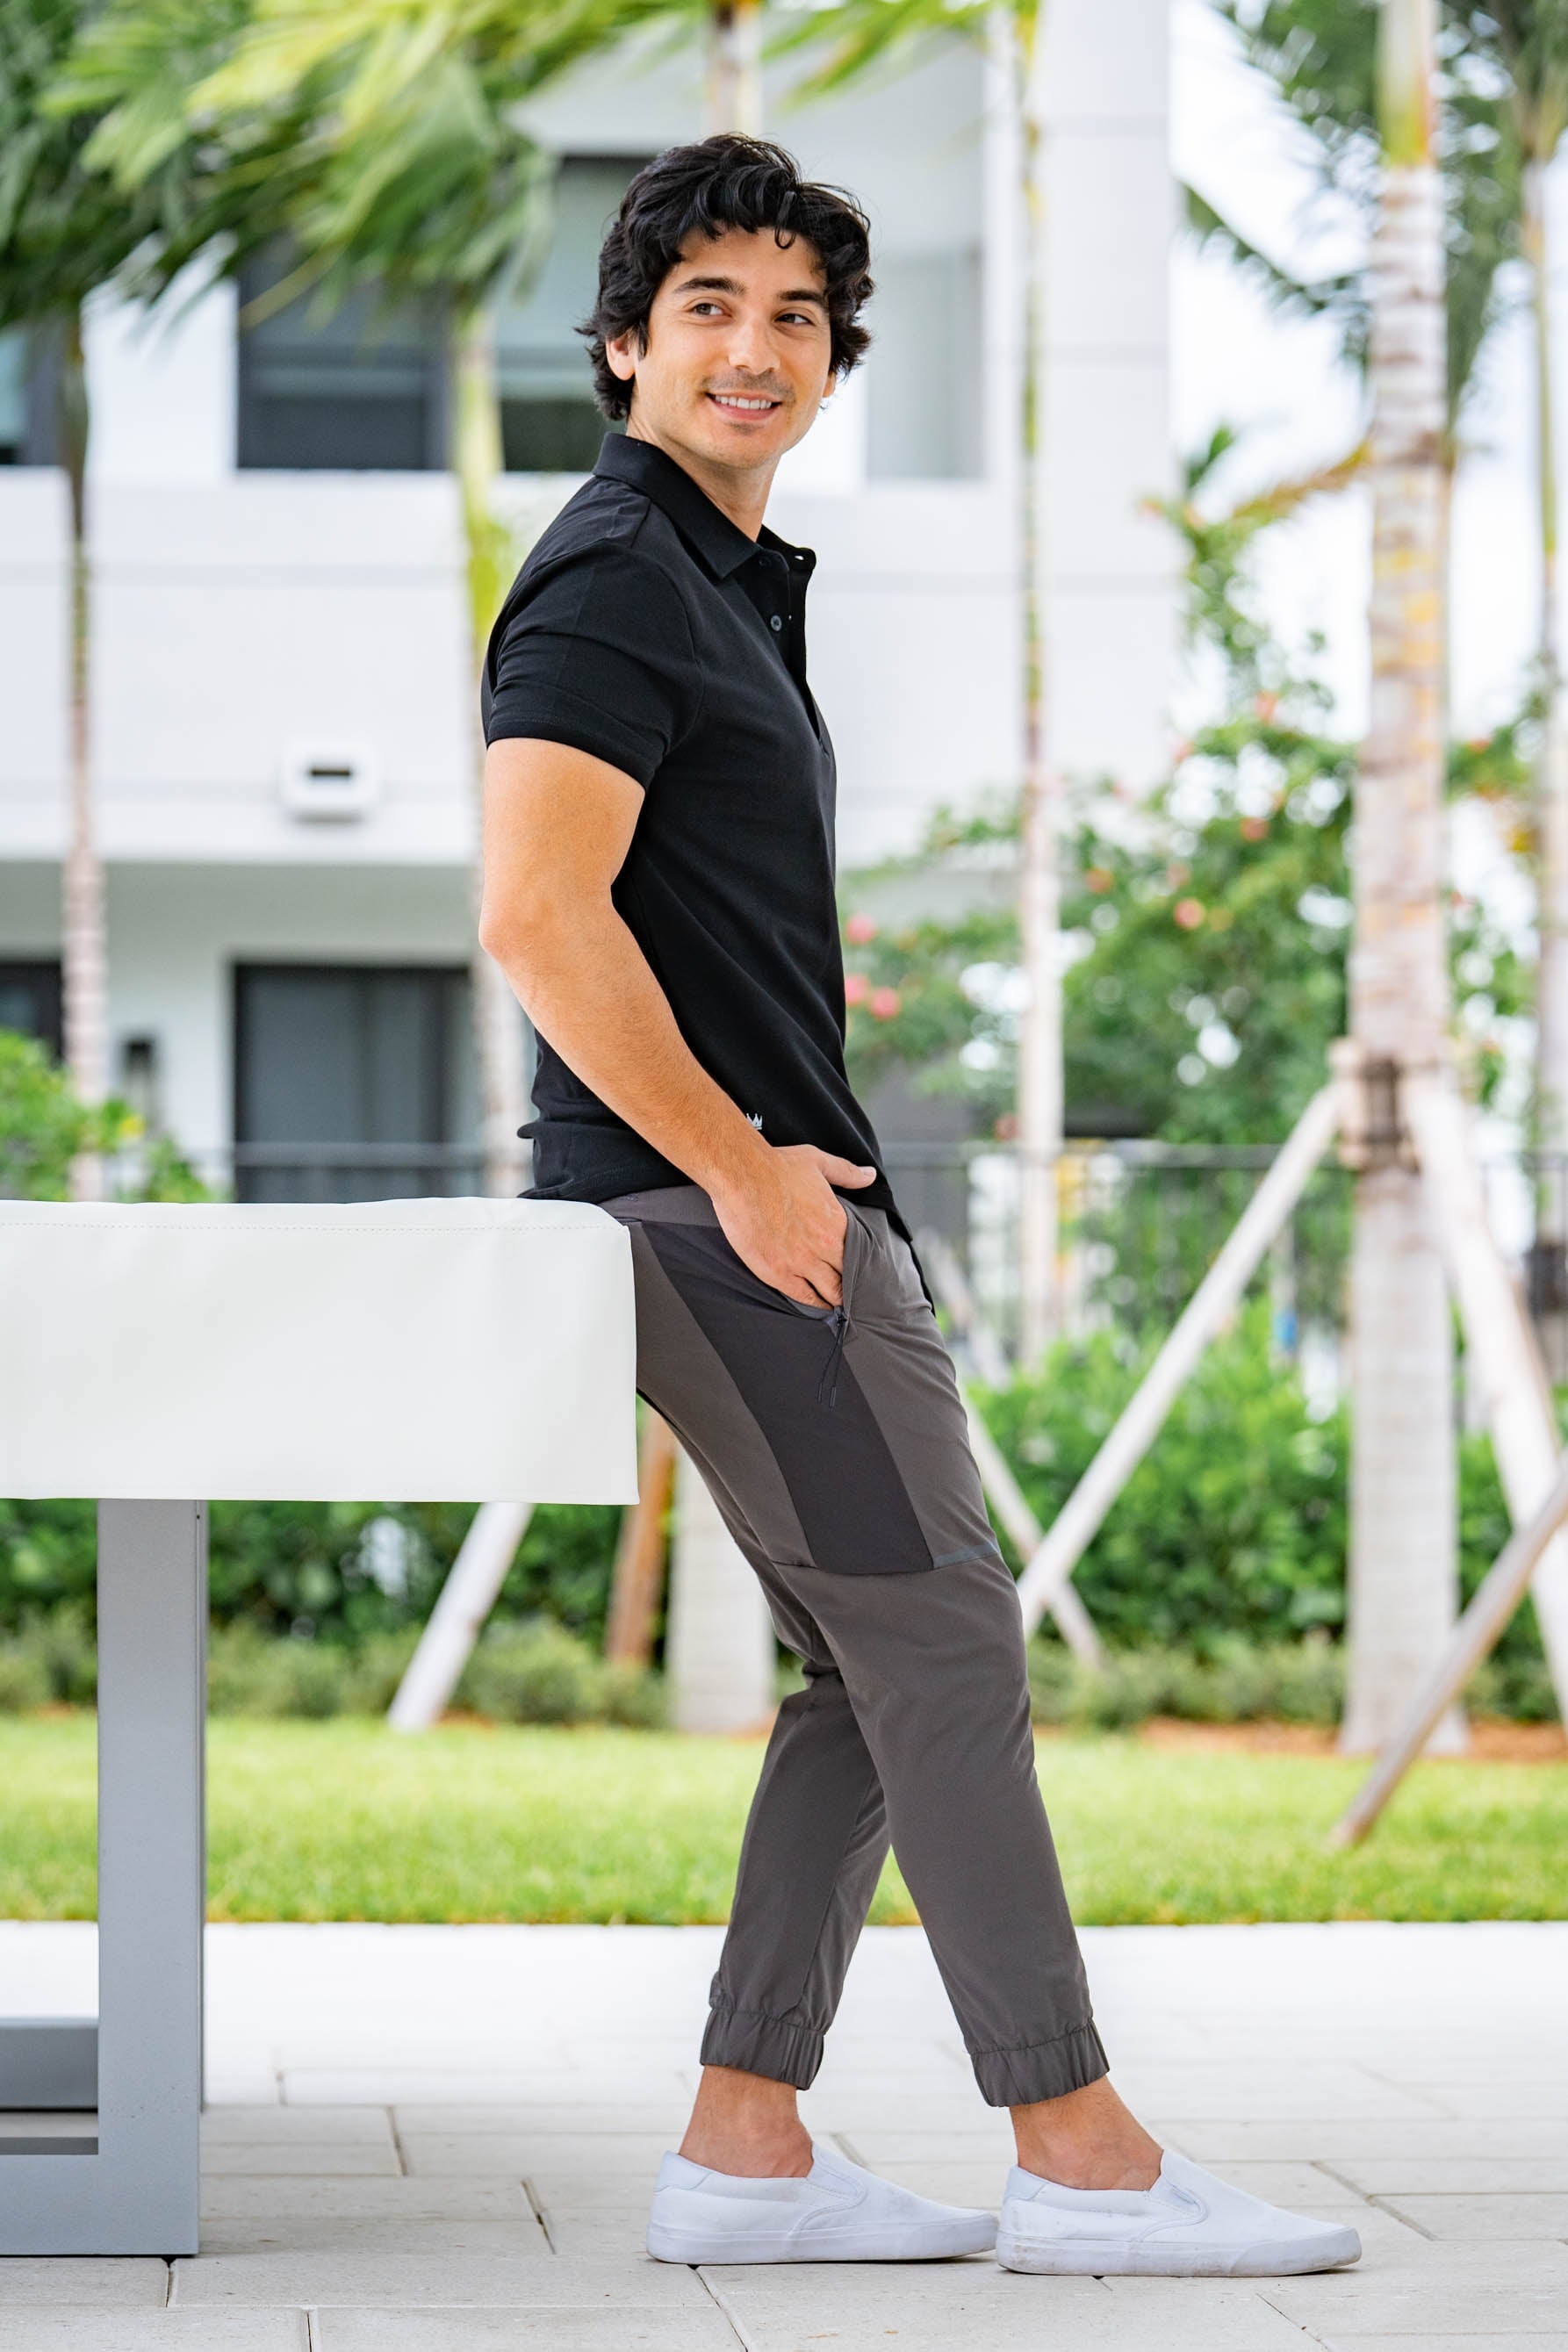 Inseam of Pants: Men's Tall Five Pocket Fatigue Green Pant